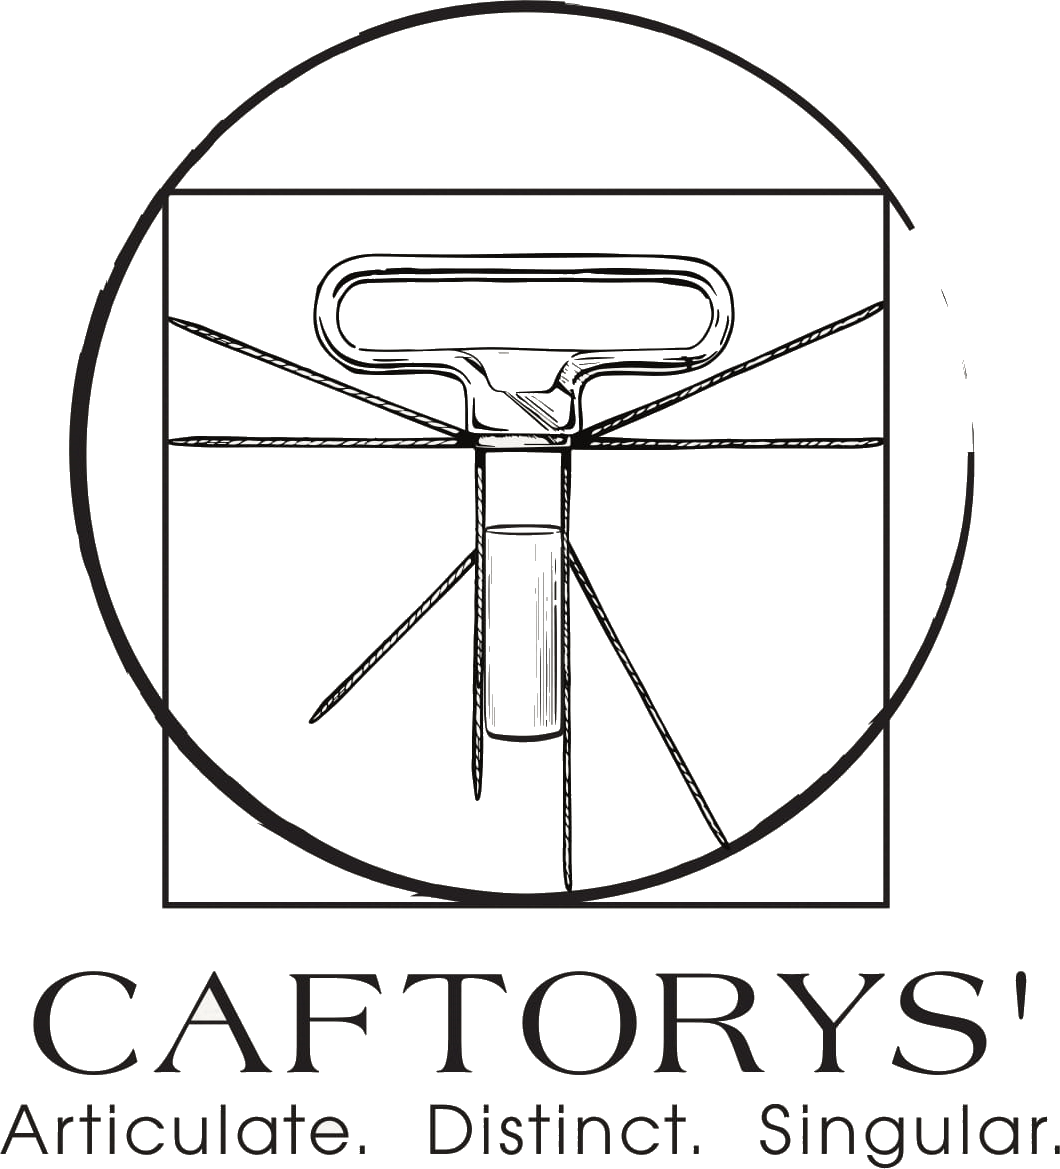 CAFTORYS' - Articulate, Distinct, Singular